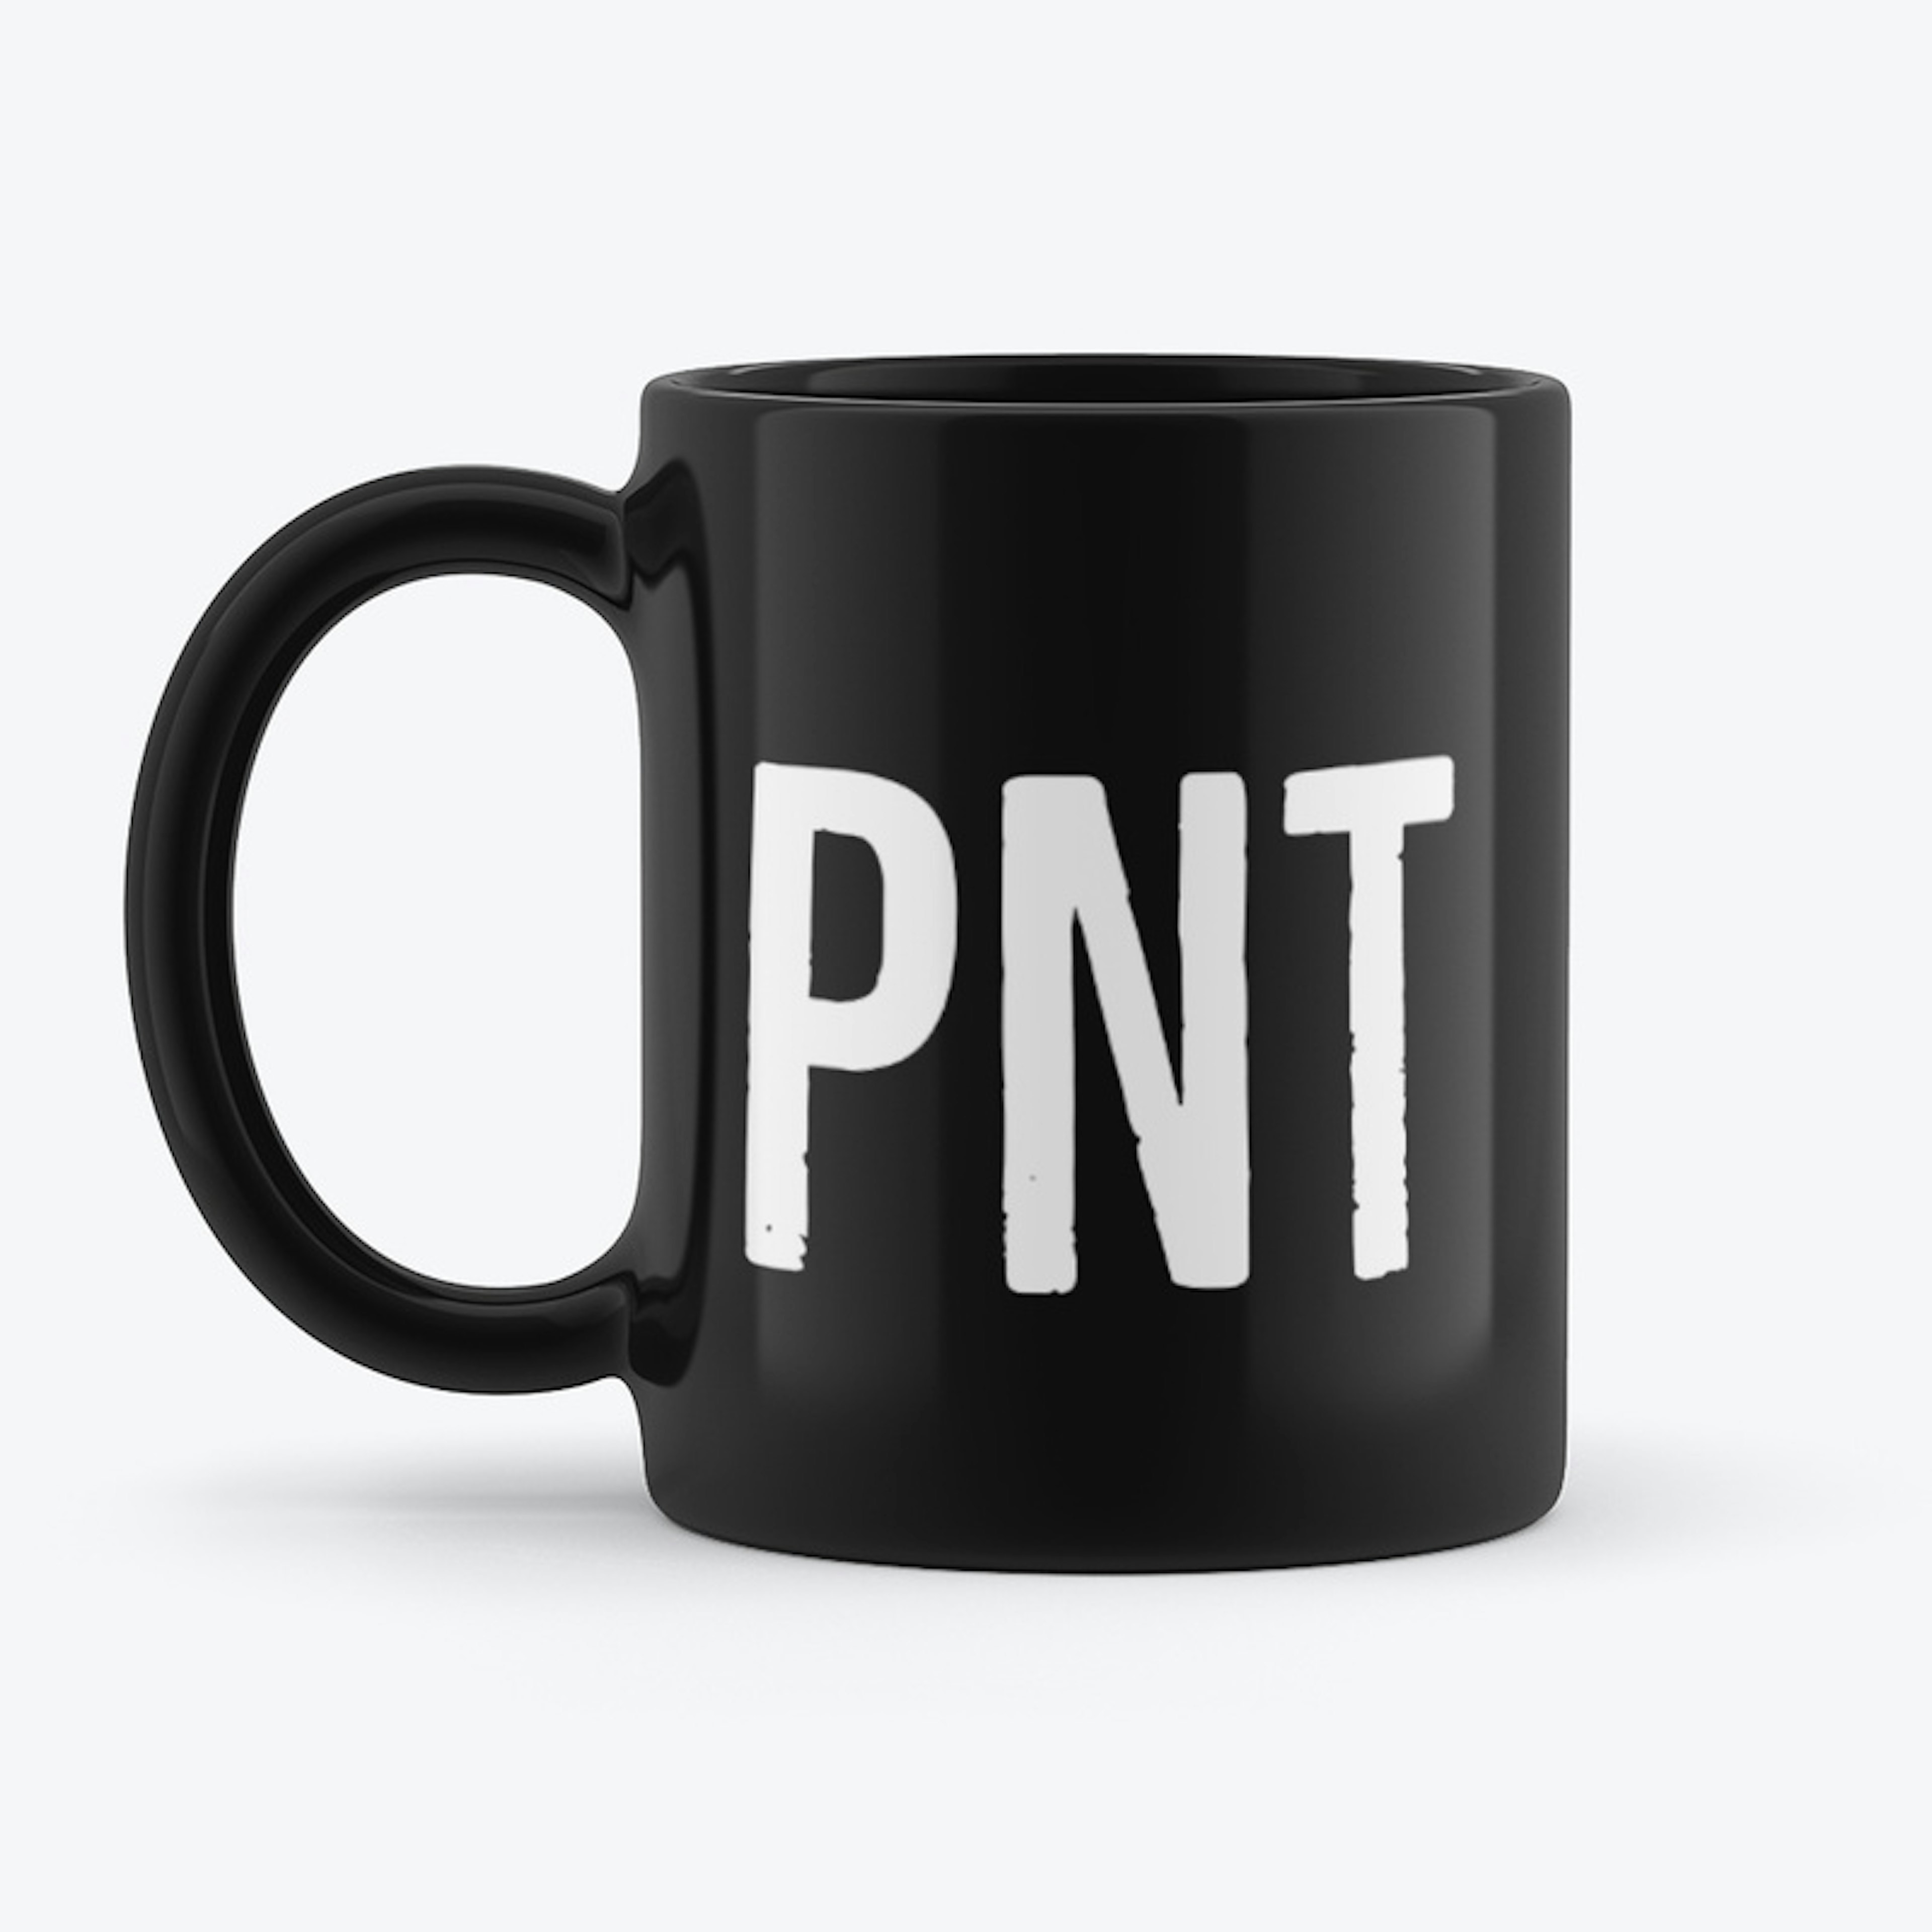 PNT Mug 2 / Wine Tumbler